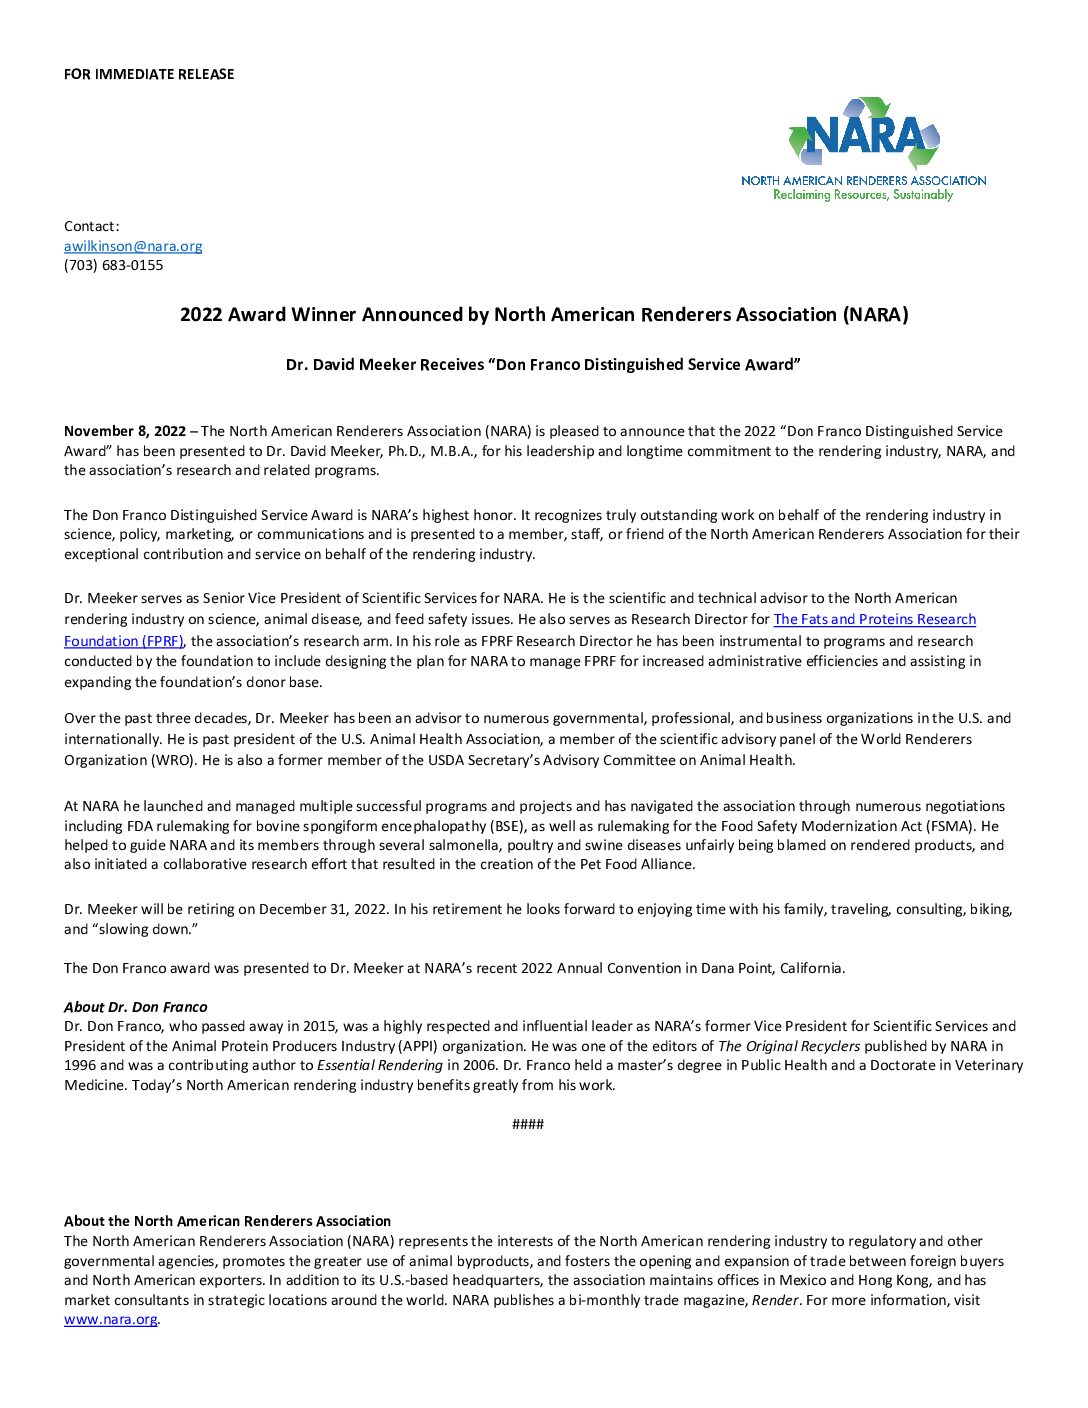 2022 Don Franco Distinguished Service Award Press Release